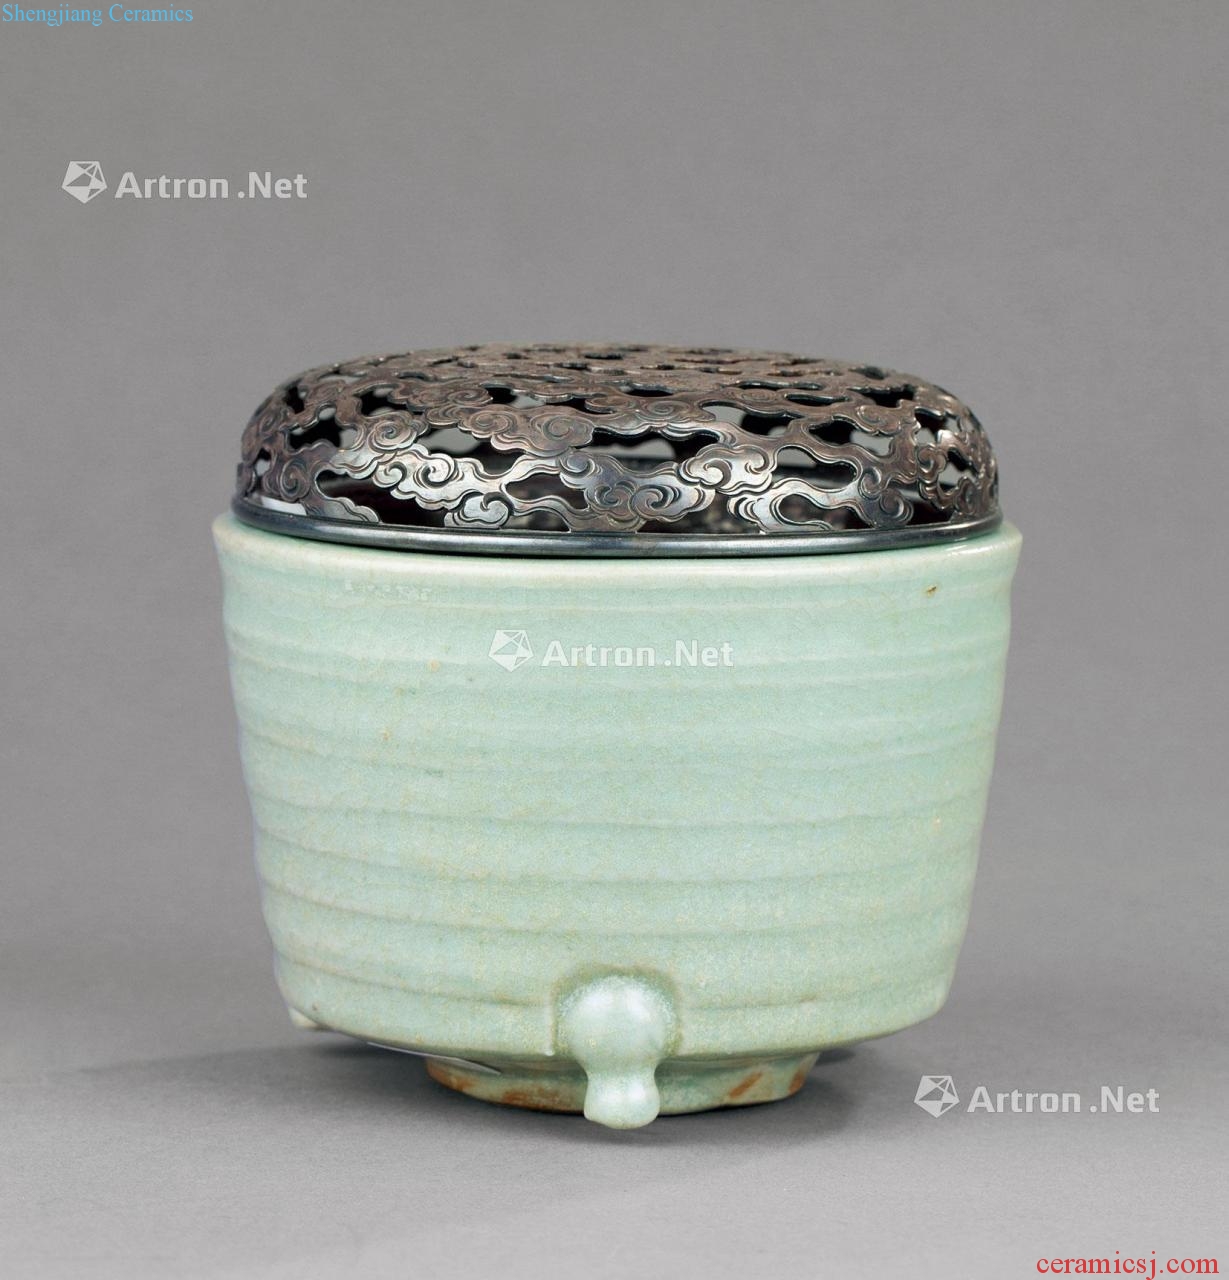 Yuan dynasty (1279-1368), longquan celadon bowstring grain three-legged incense burner